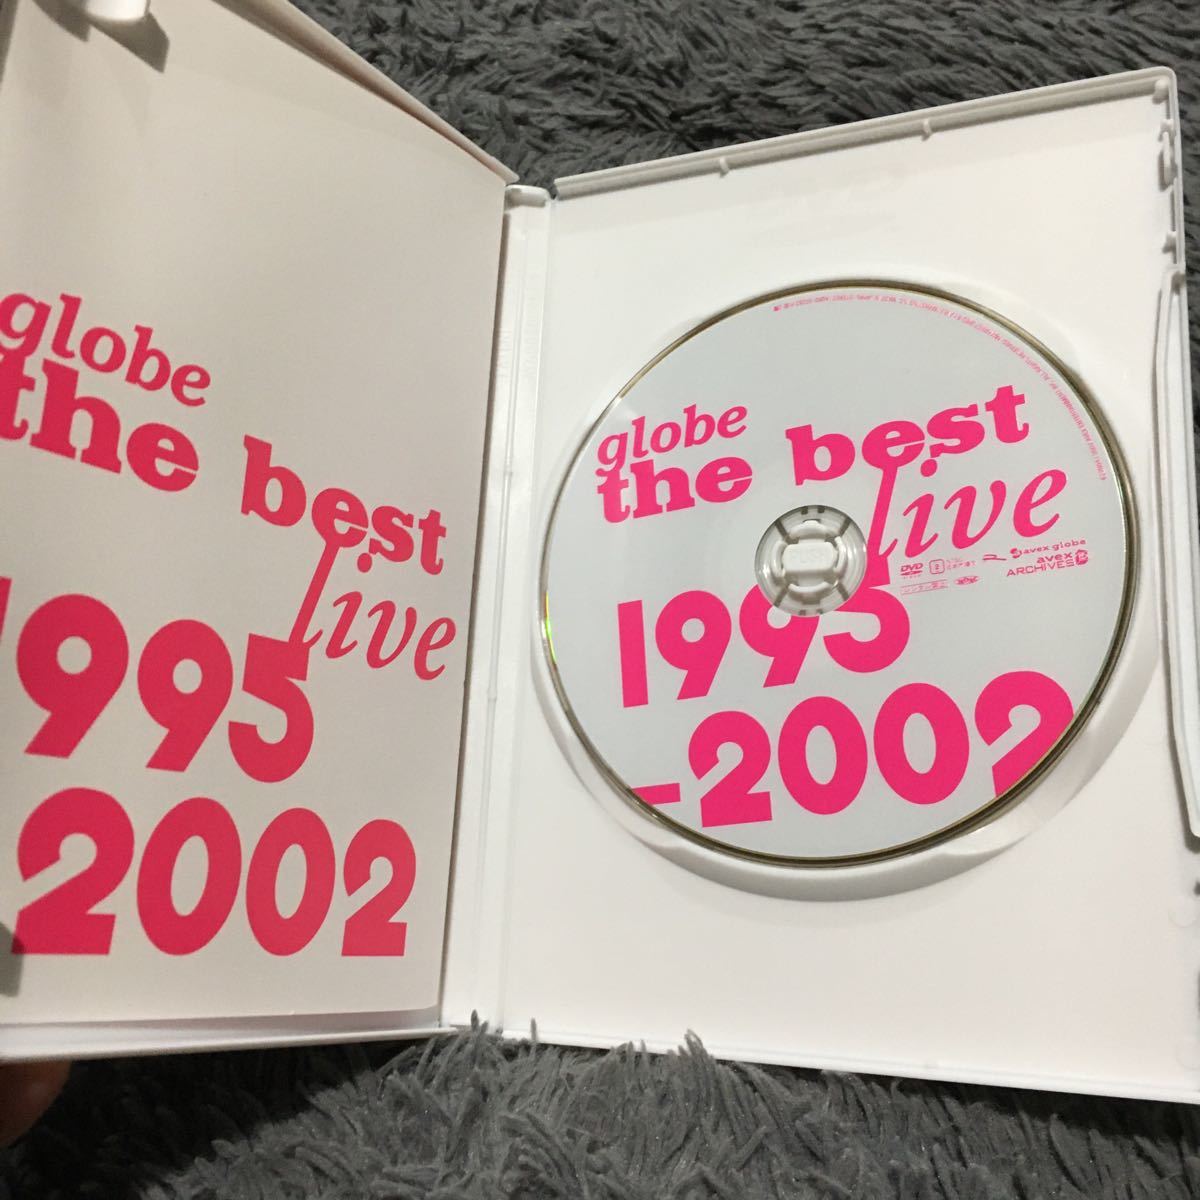 globe the best live 1995-2002 vol.1 DVD